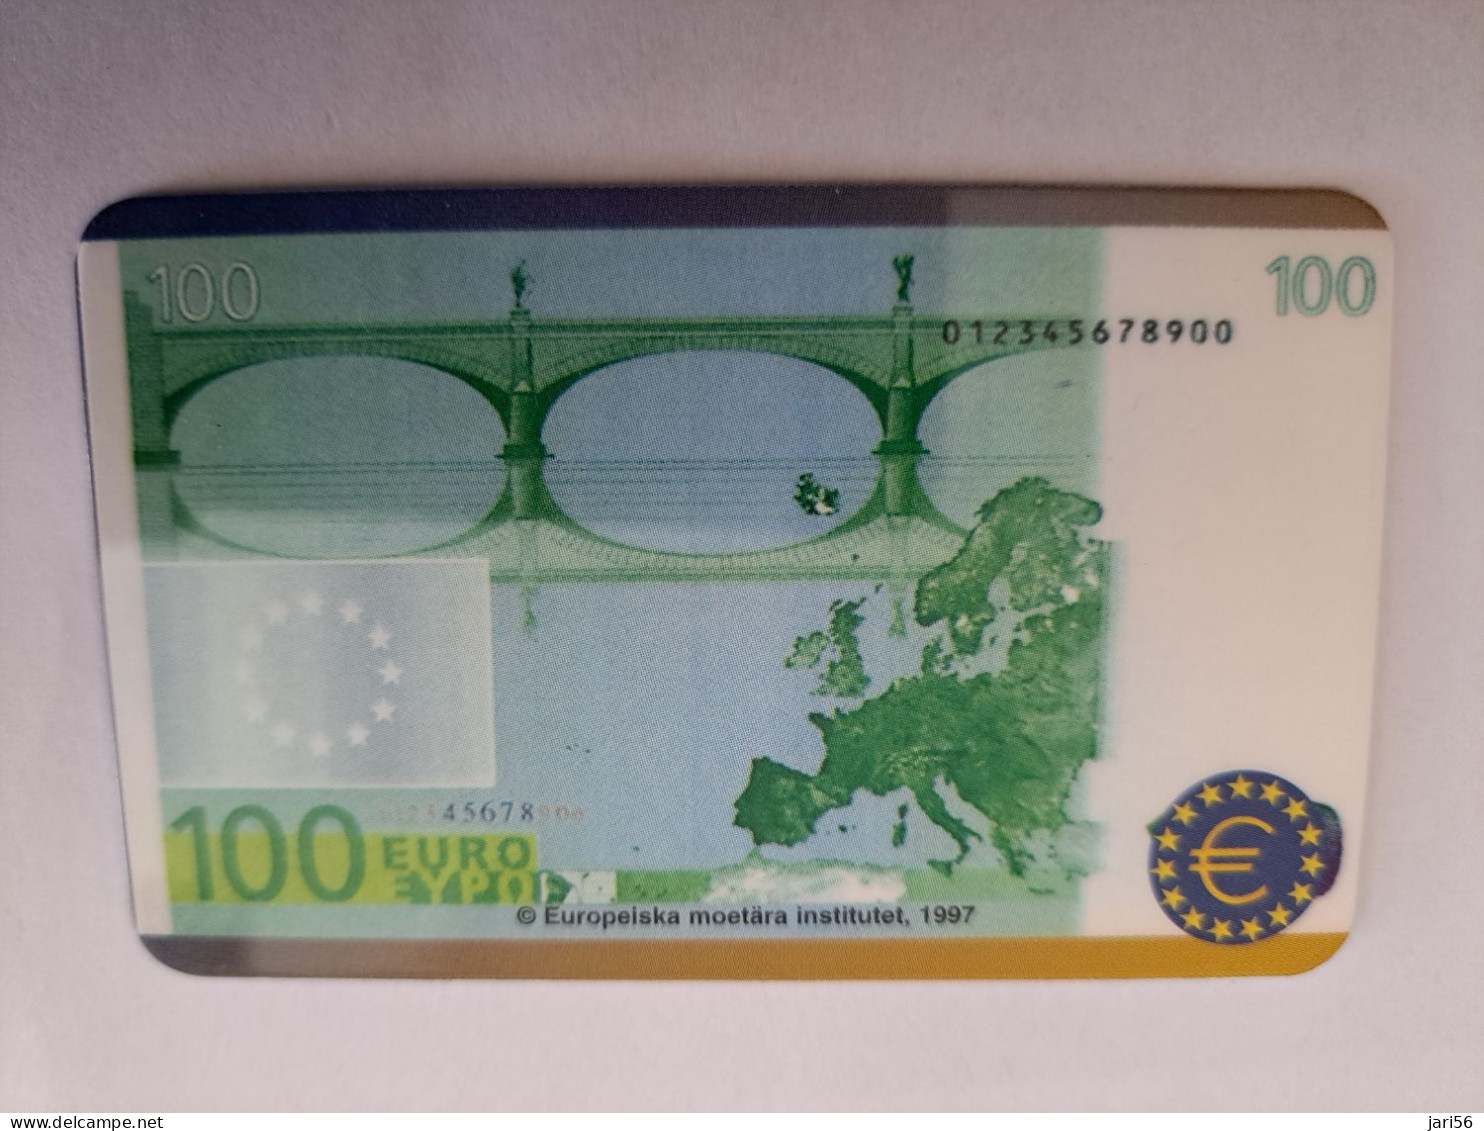 GREAT BRITAIN   20 UNITS   / EURO COINS/ BILJET 100 EURO    (date 09/ 98)  PREPAID CARD / MINT      **13308** - [10] Colecciones